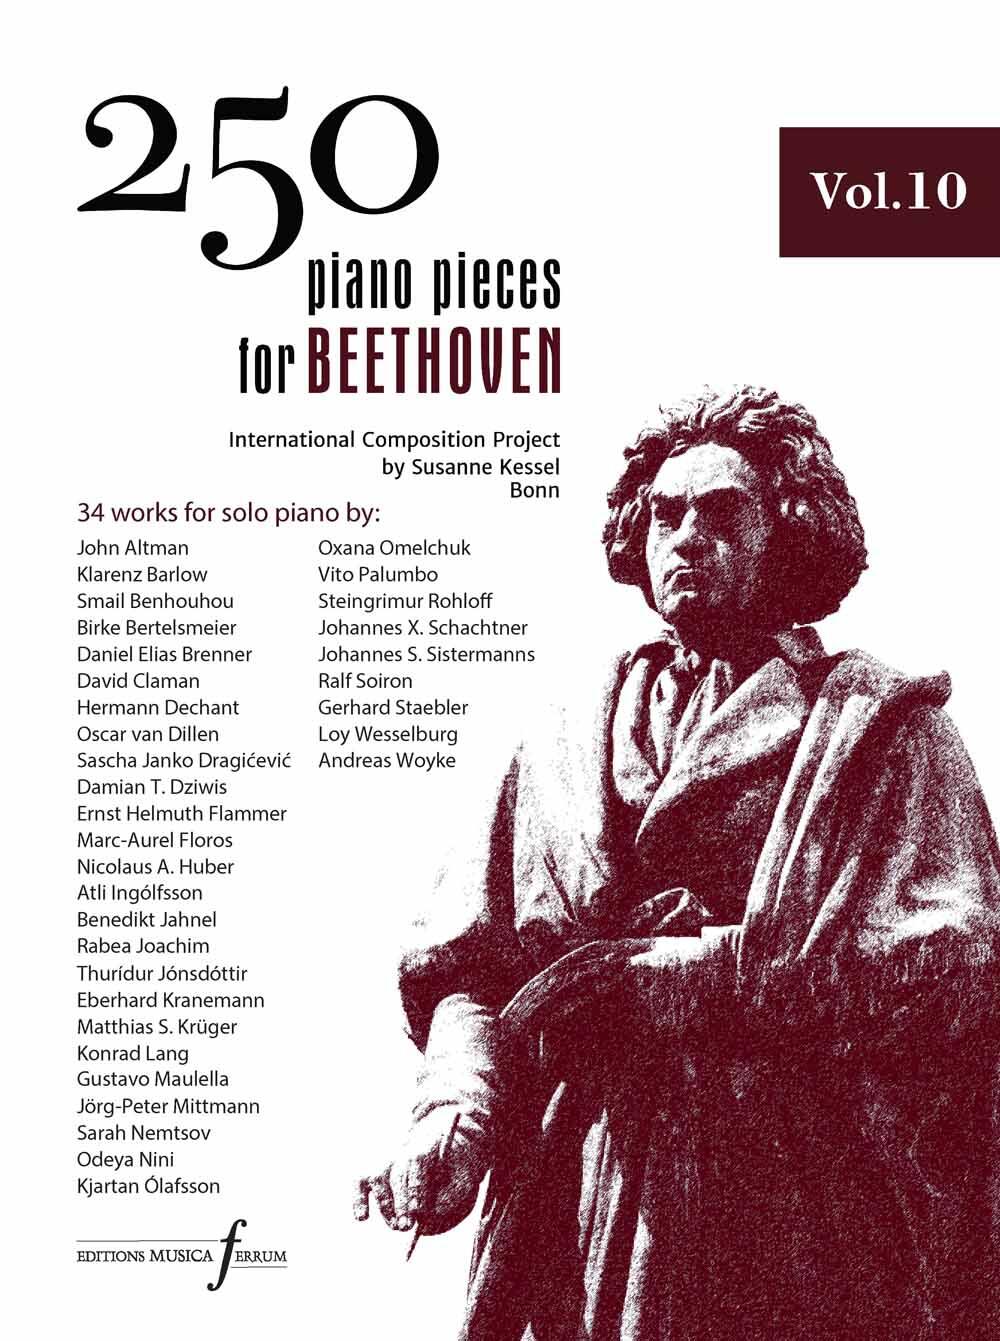 Musica Ferrum 250 Piano Pieces For Beethoven - Vol. 10 : photo 1